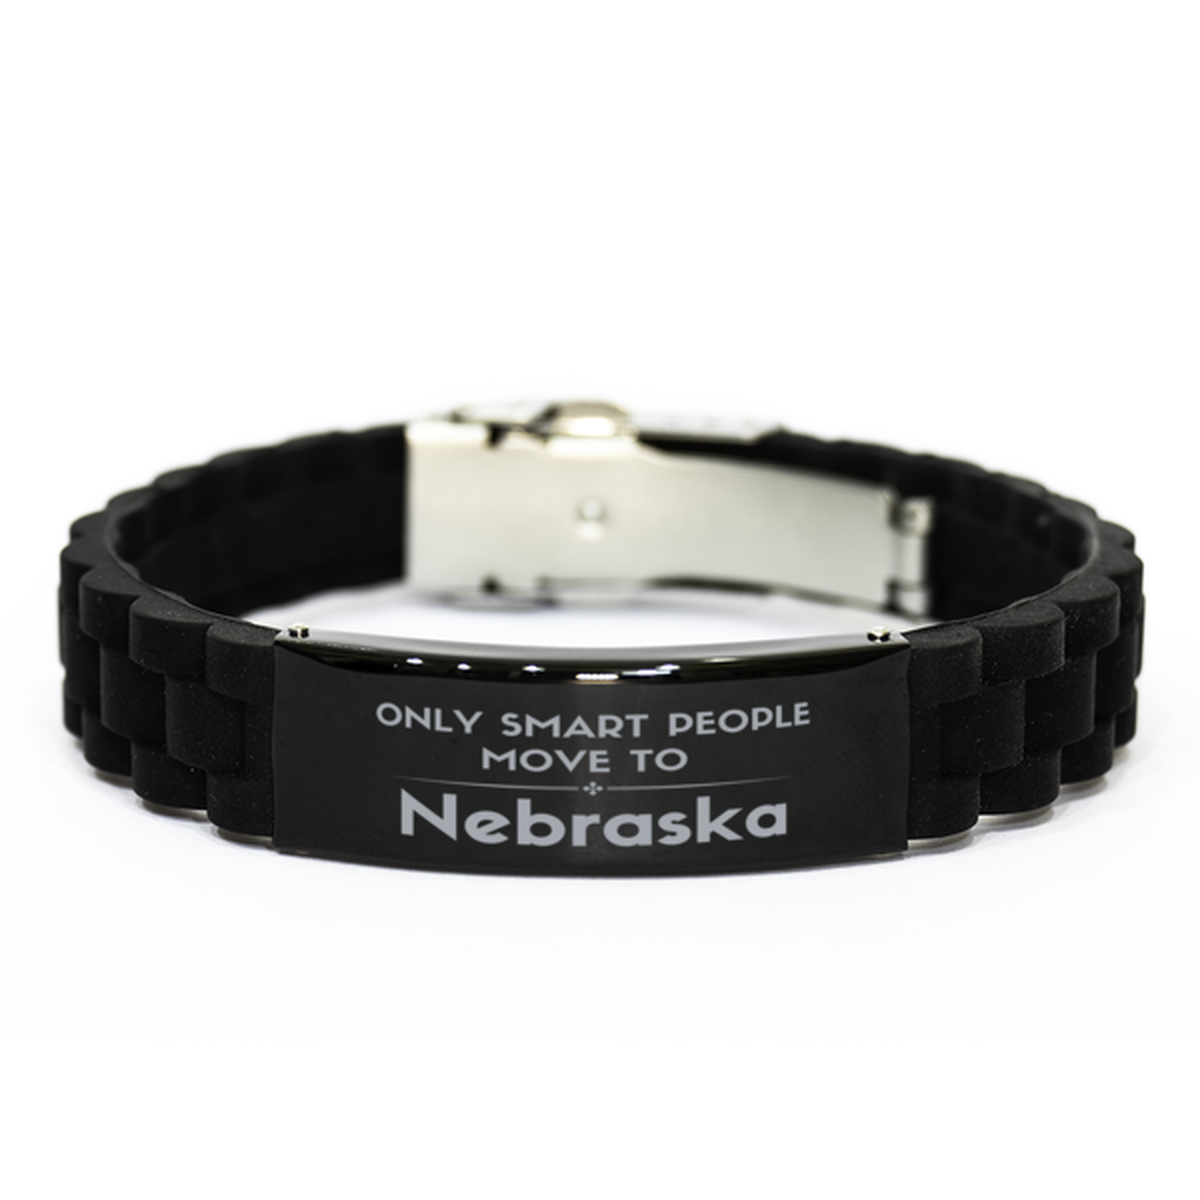 Only smart people move to Nebraska Black Glidelock Clasp Bracelet, Gag Gifts For Nebraska, Move to Nebraska Gifts for Friends Coworker Funny Saying Quote